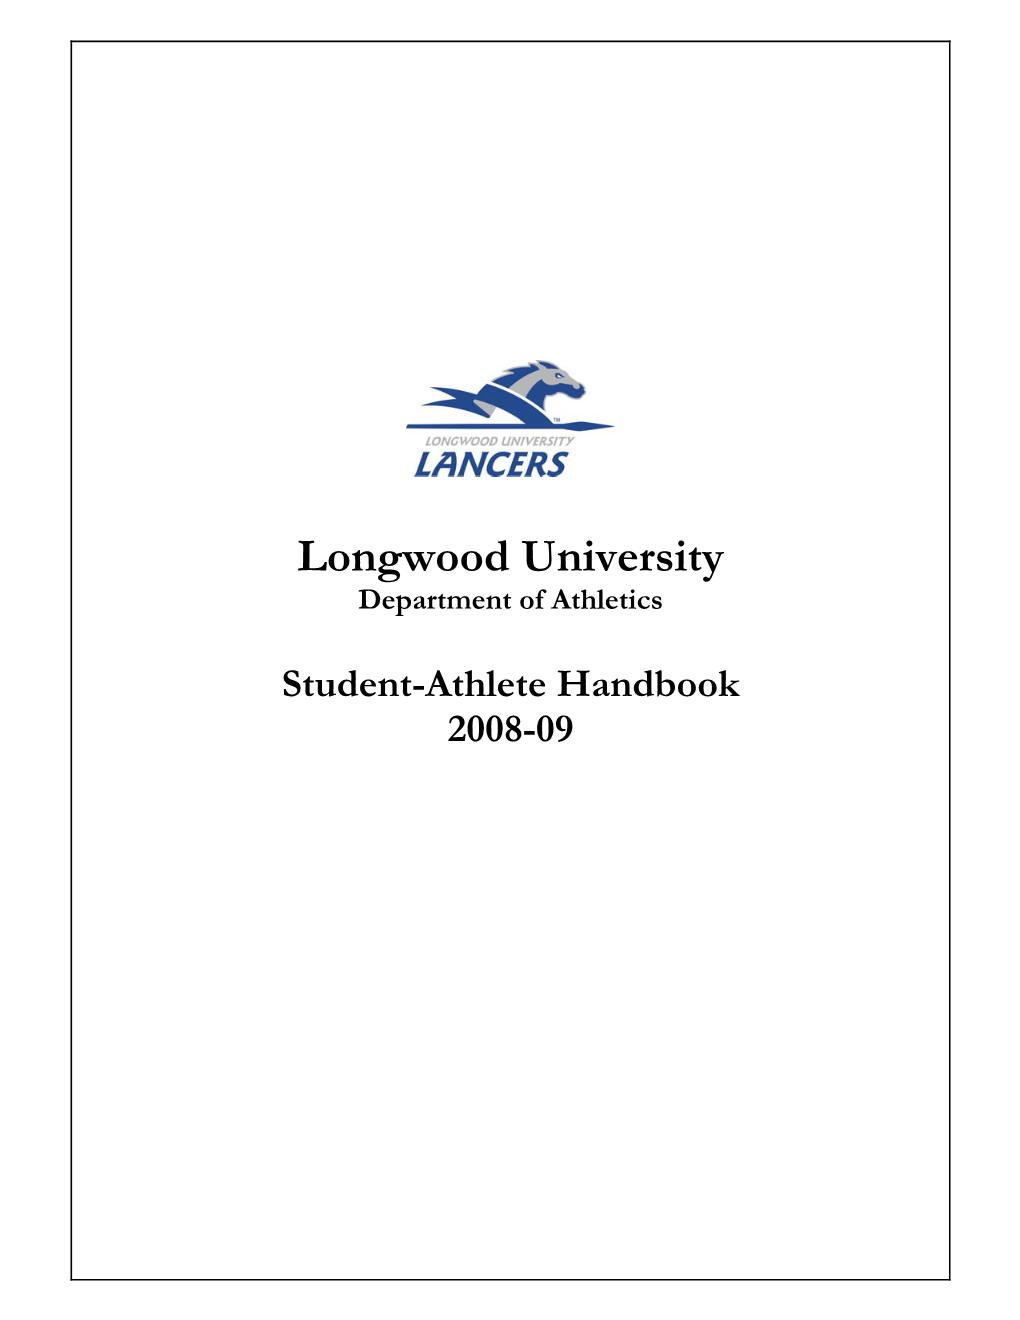 Longwood University Department of Athletics